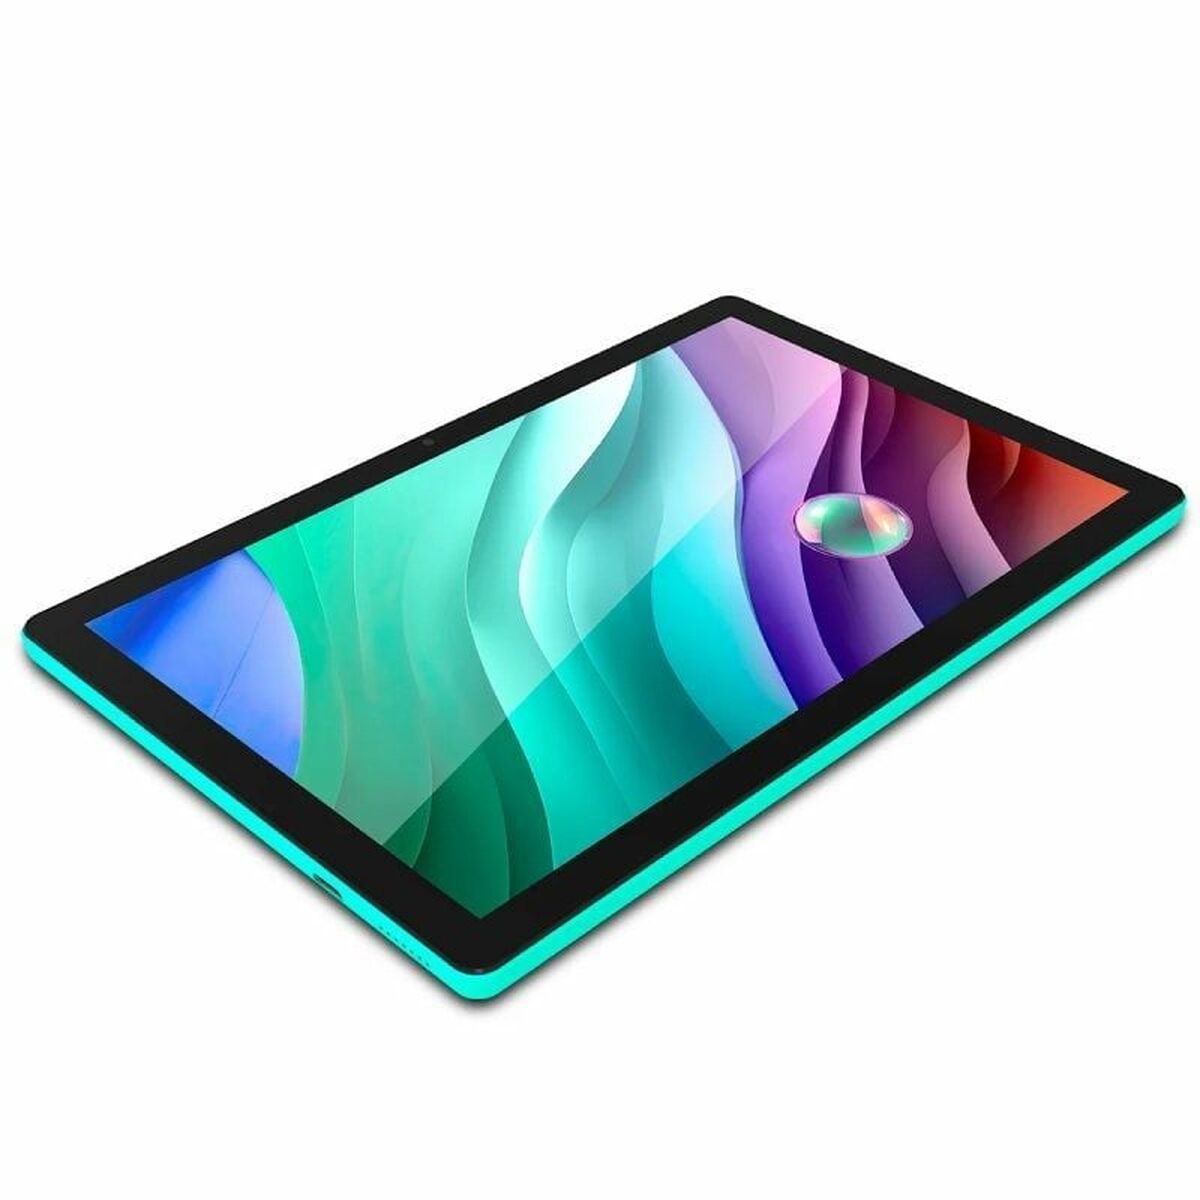 Tablet SPC Gravity 5 SE Octa Core 4 GB RAM 64 GB grün 10,1"